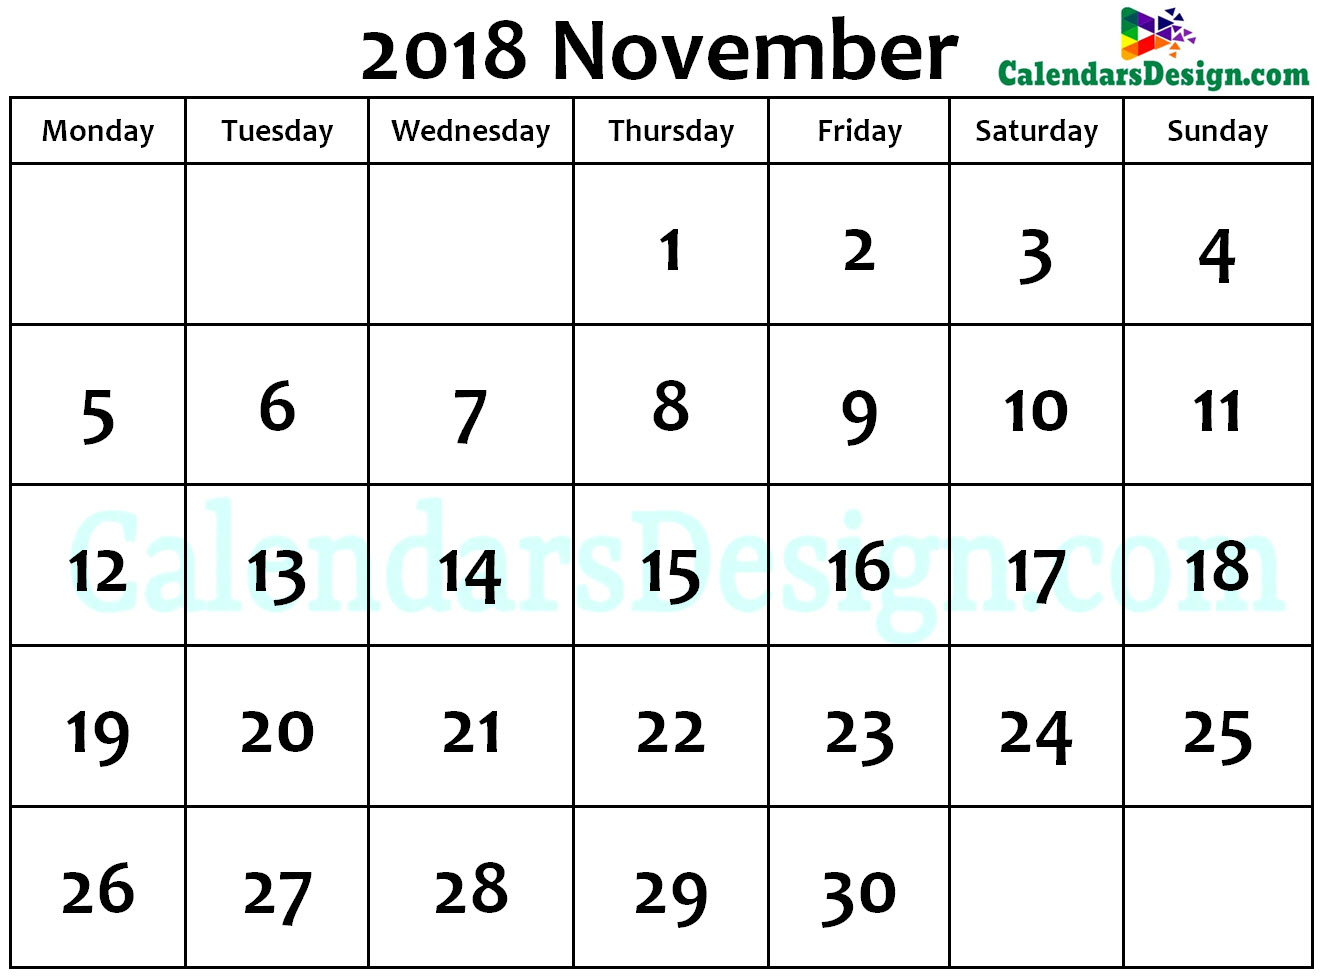 November Calendar 2018 Word Format